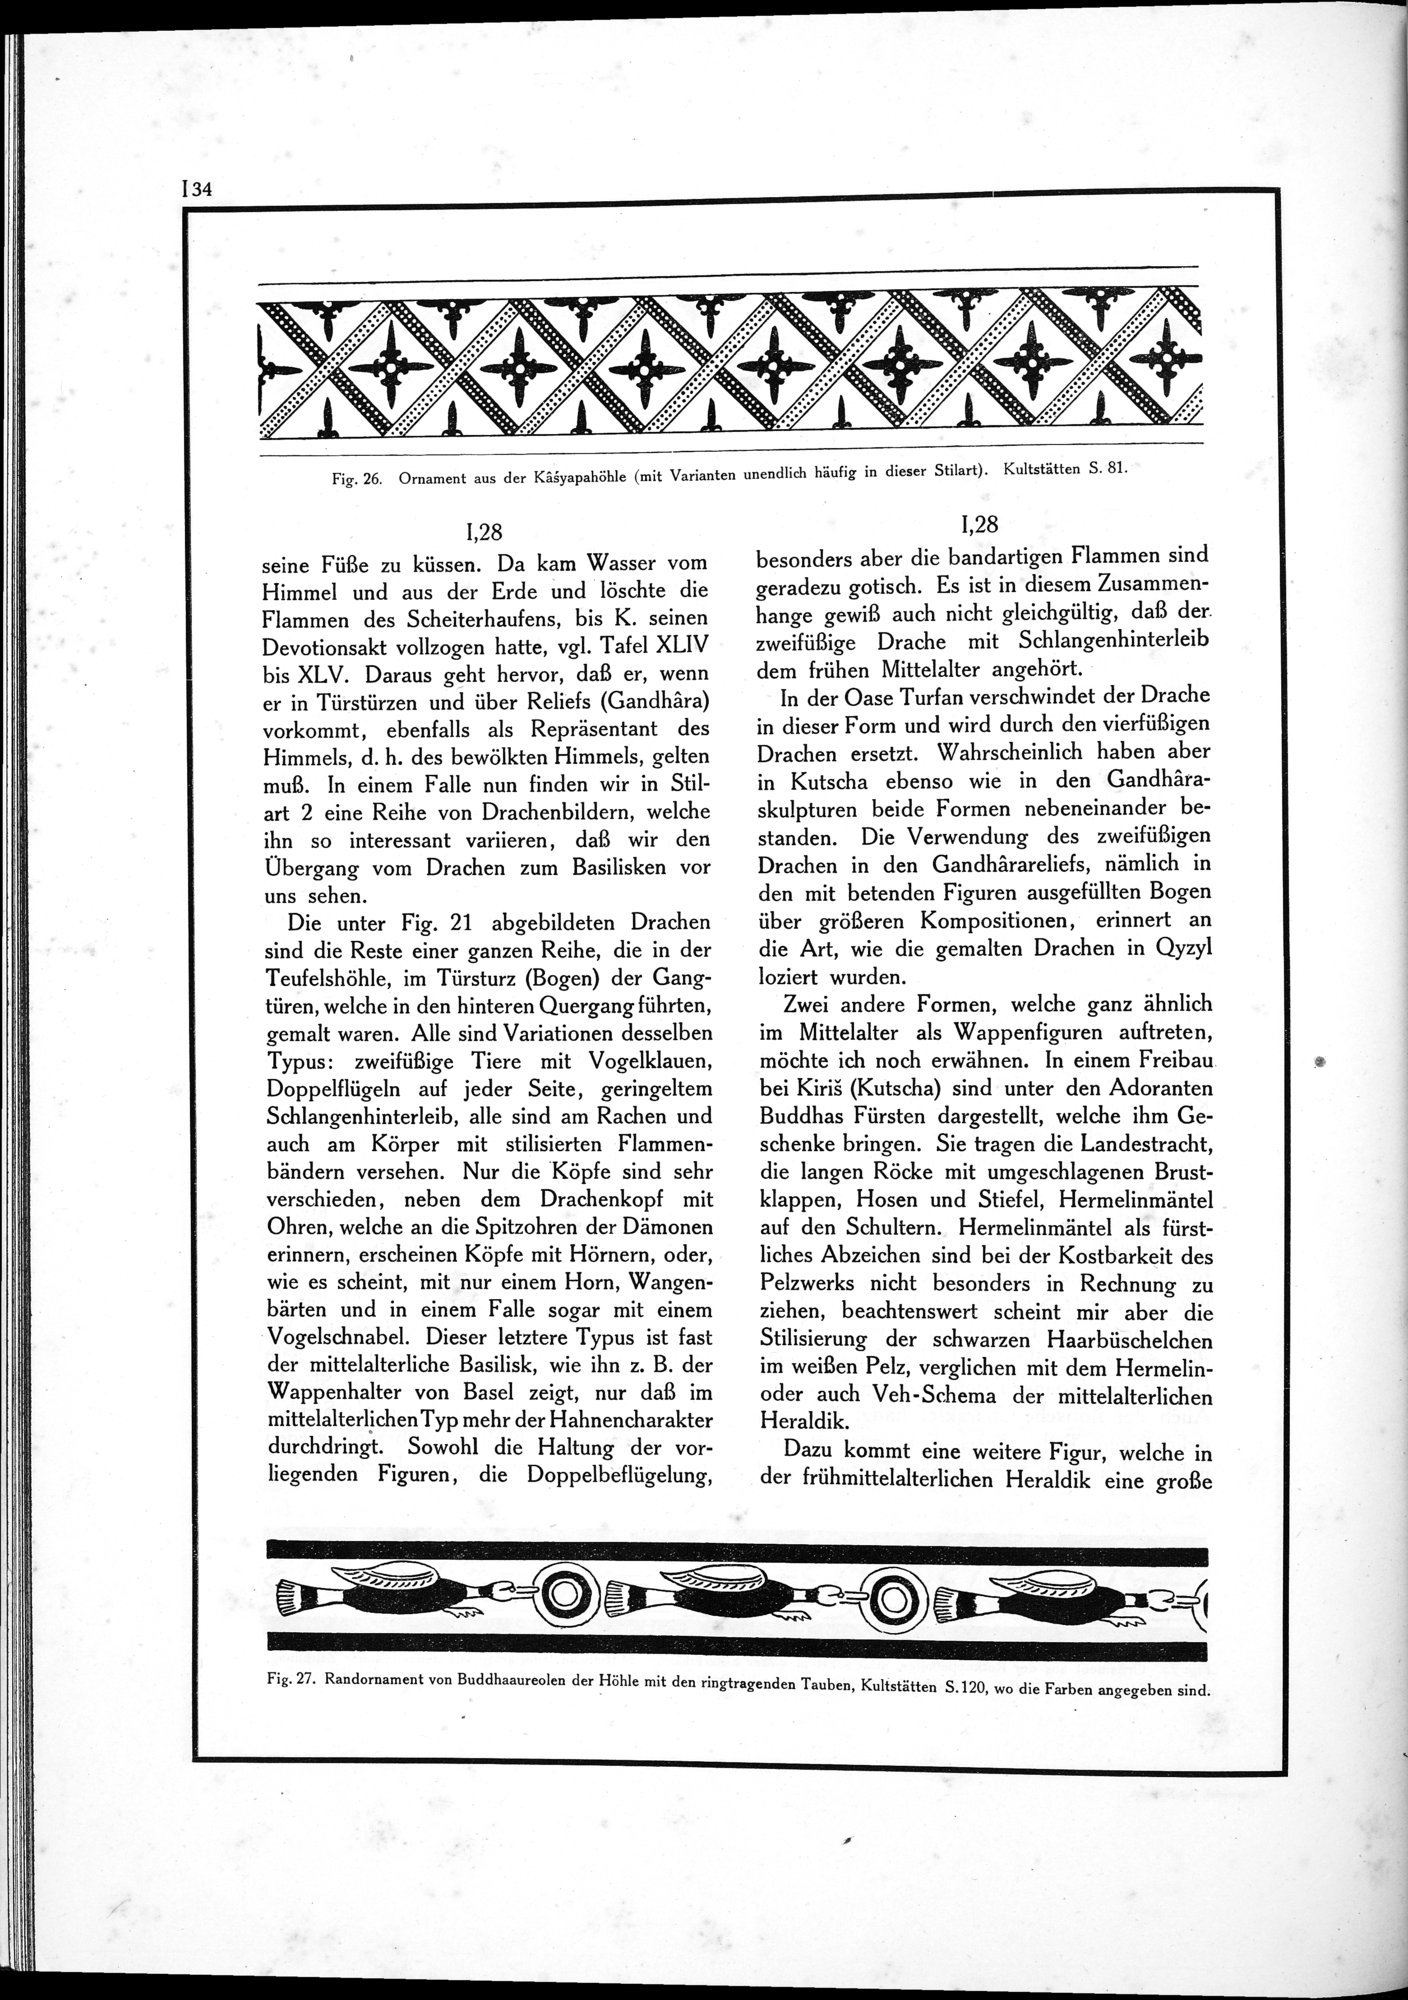 Alt-Kutscha : vol.1 / Page 46 (Grayscale High Resolution Image)